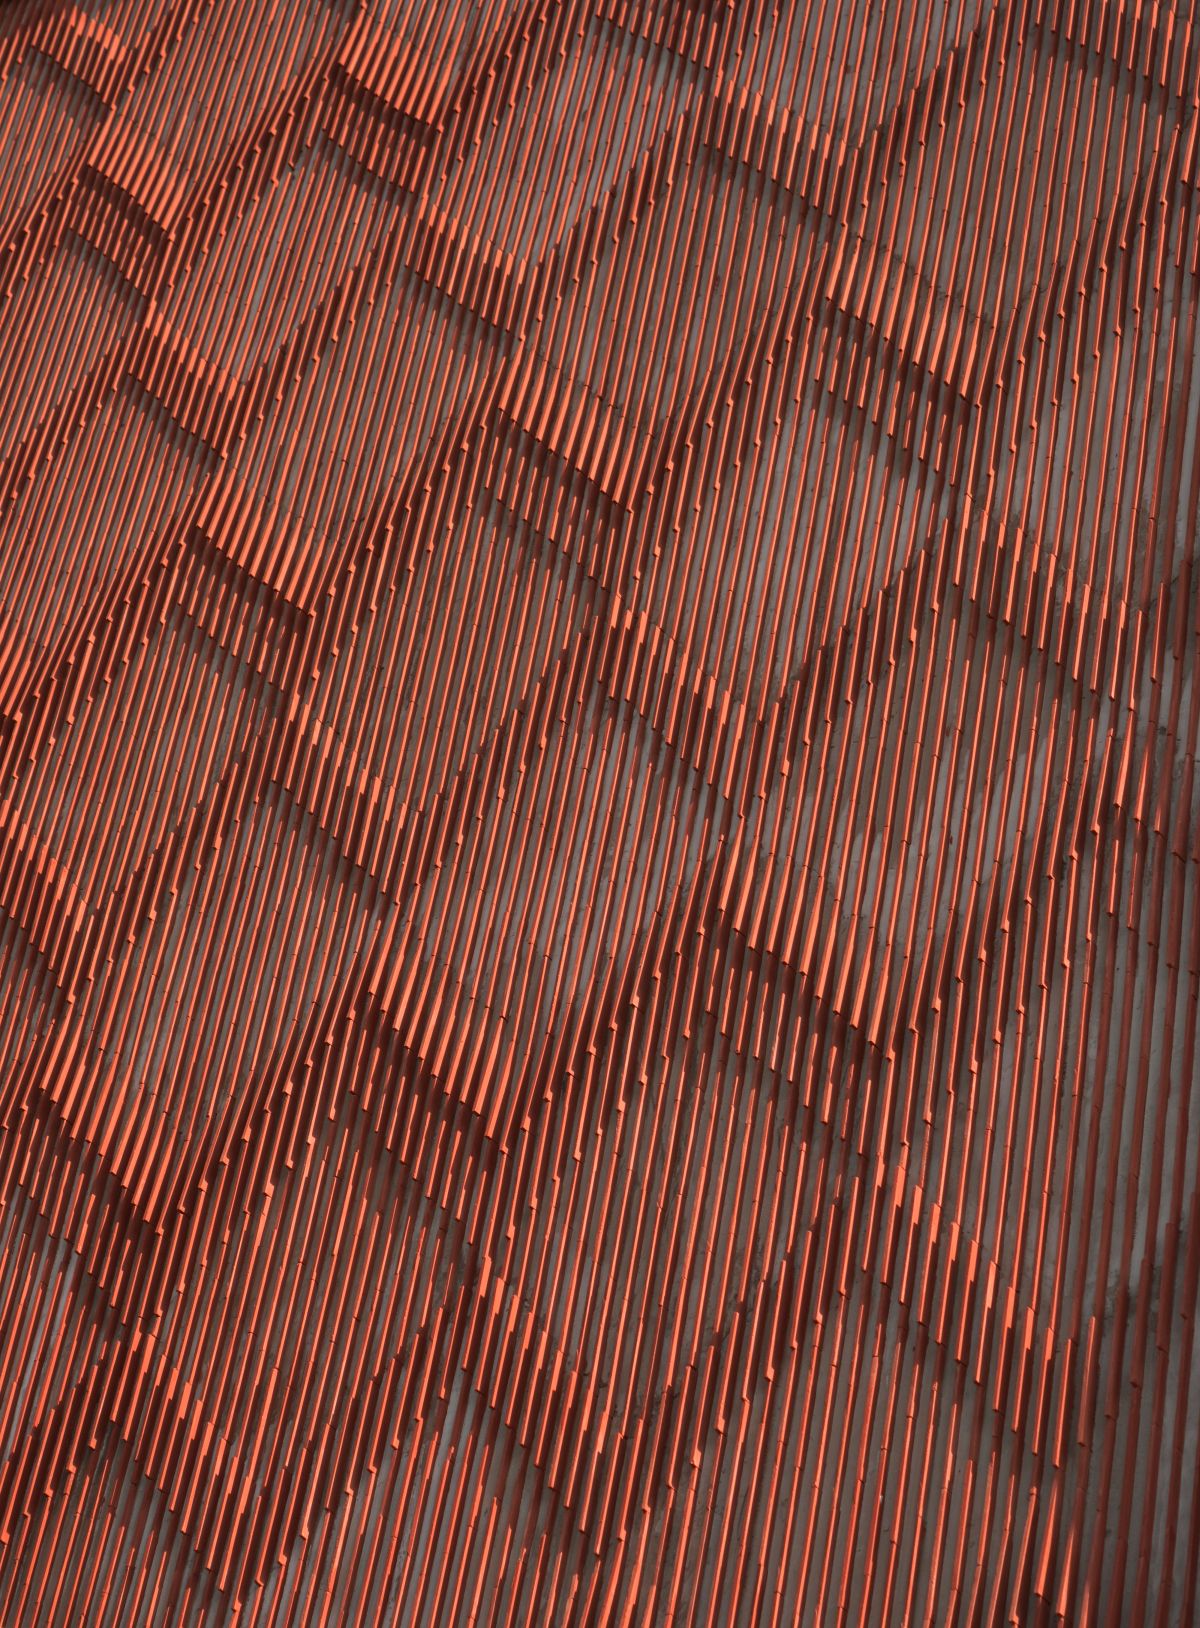 Clay roof tiles façade to minimize heat gain and has decorative function, at Vadodara, by Manoj Patel Design Studio 85